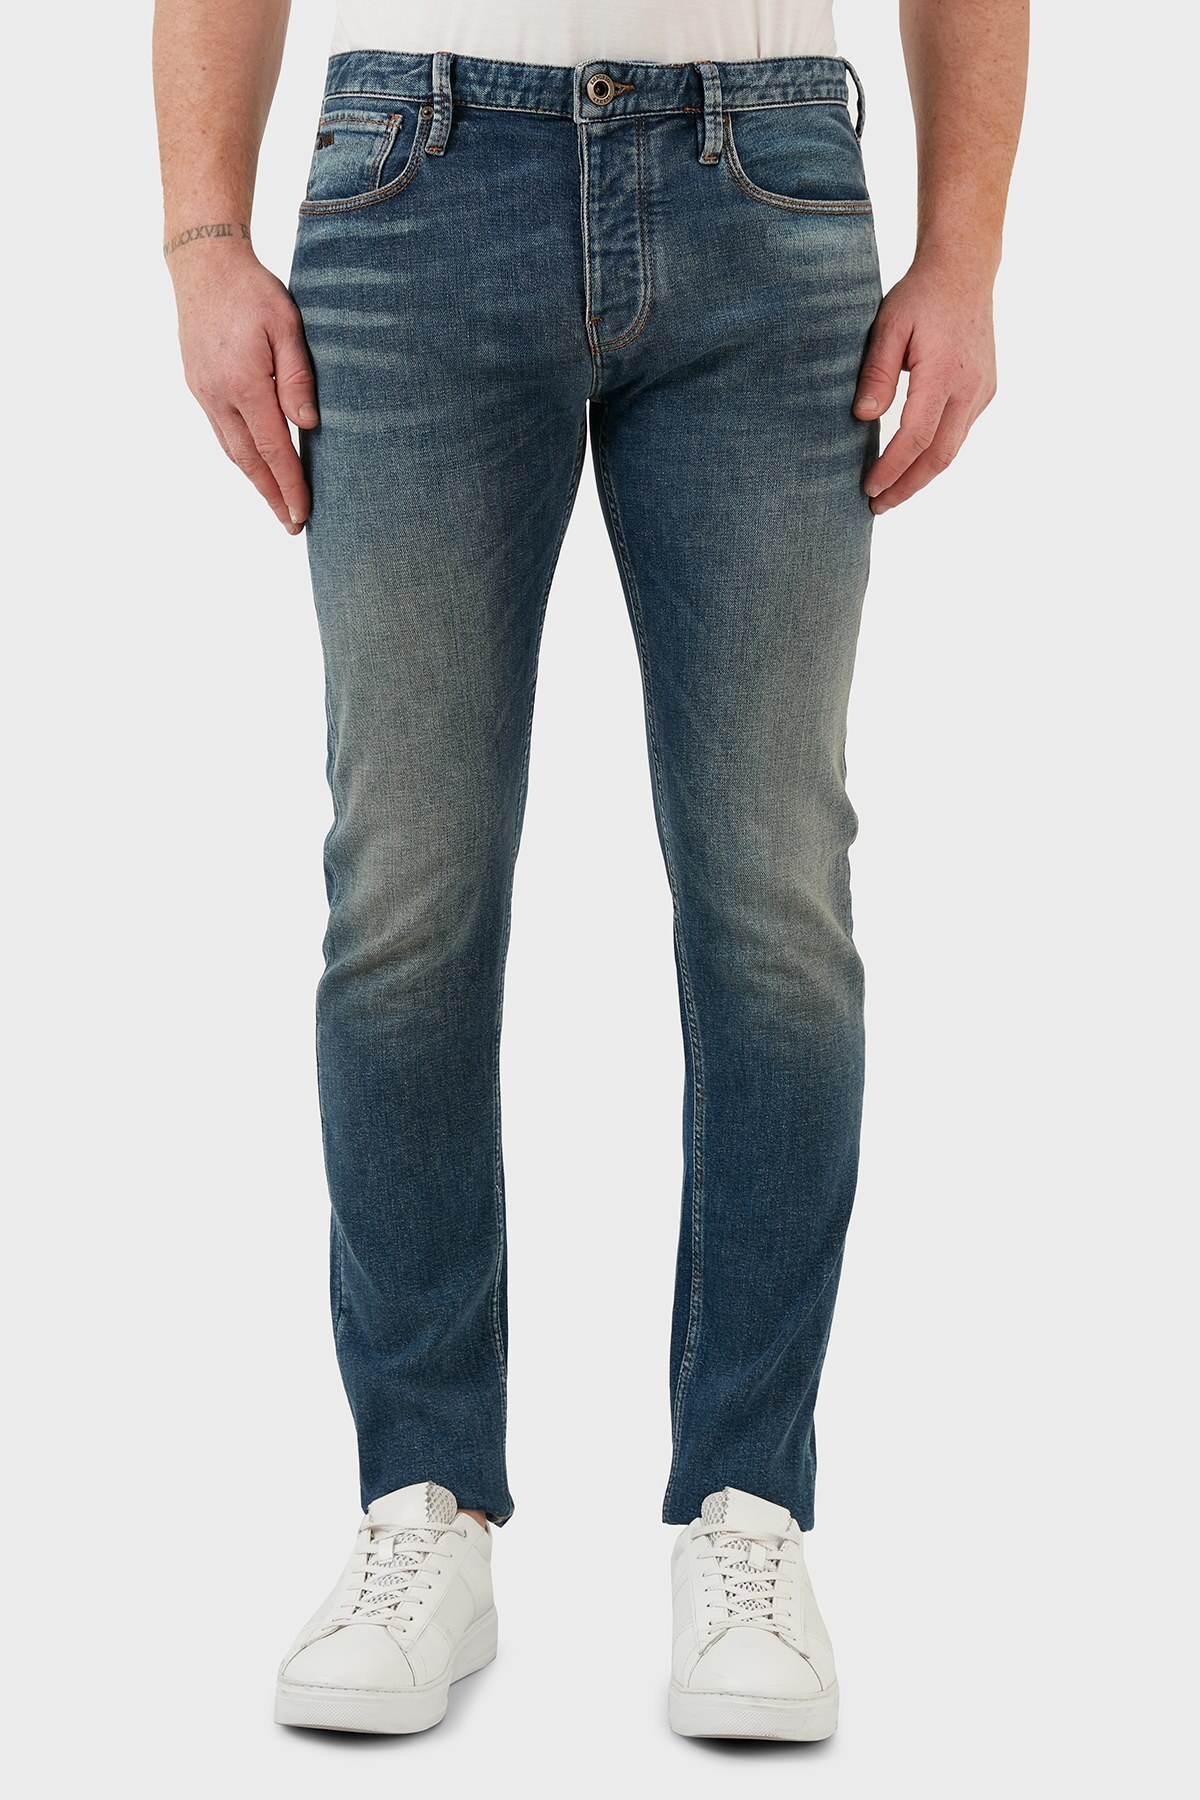 Emporio Armani Pamuklu Slim Fit Jeans Erkek Kot Pantolon 3L1J75 1DK2Z 0942 MAVİ